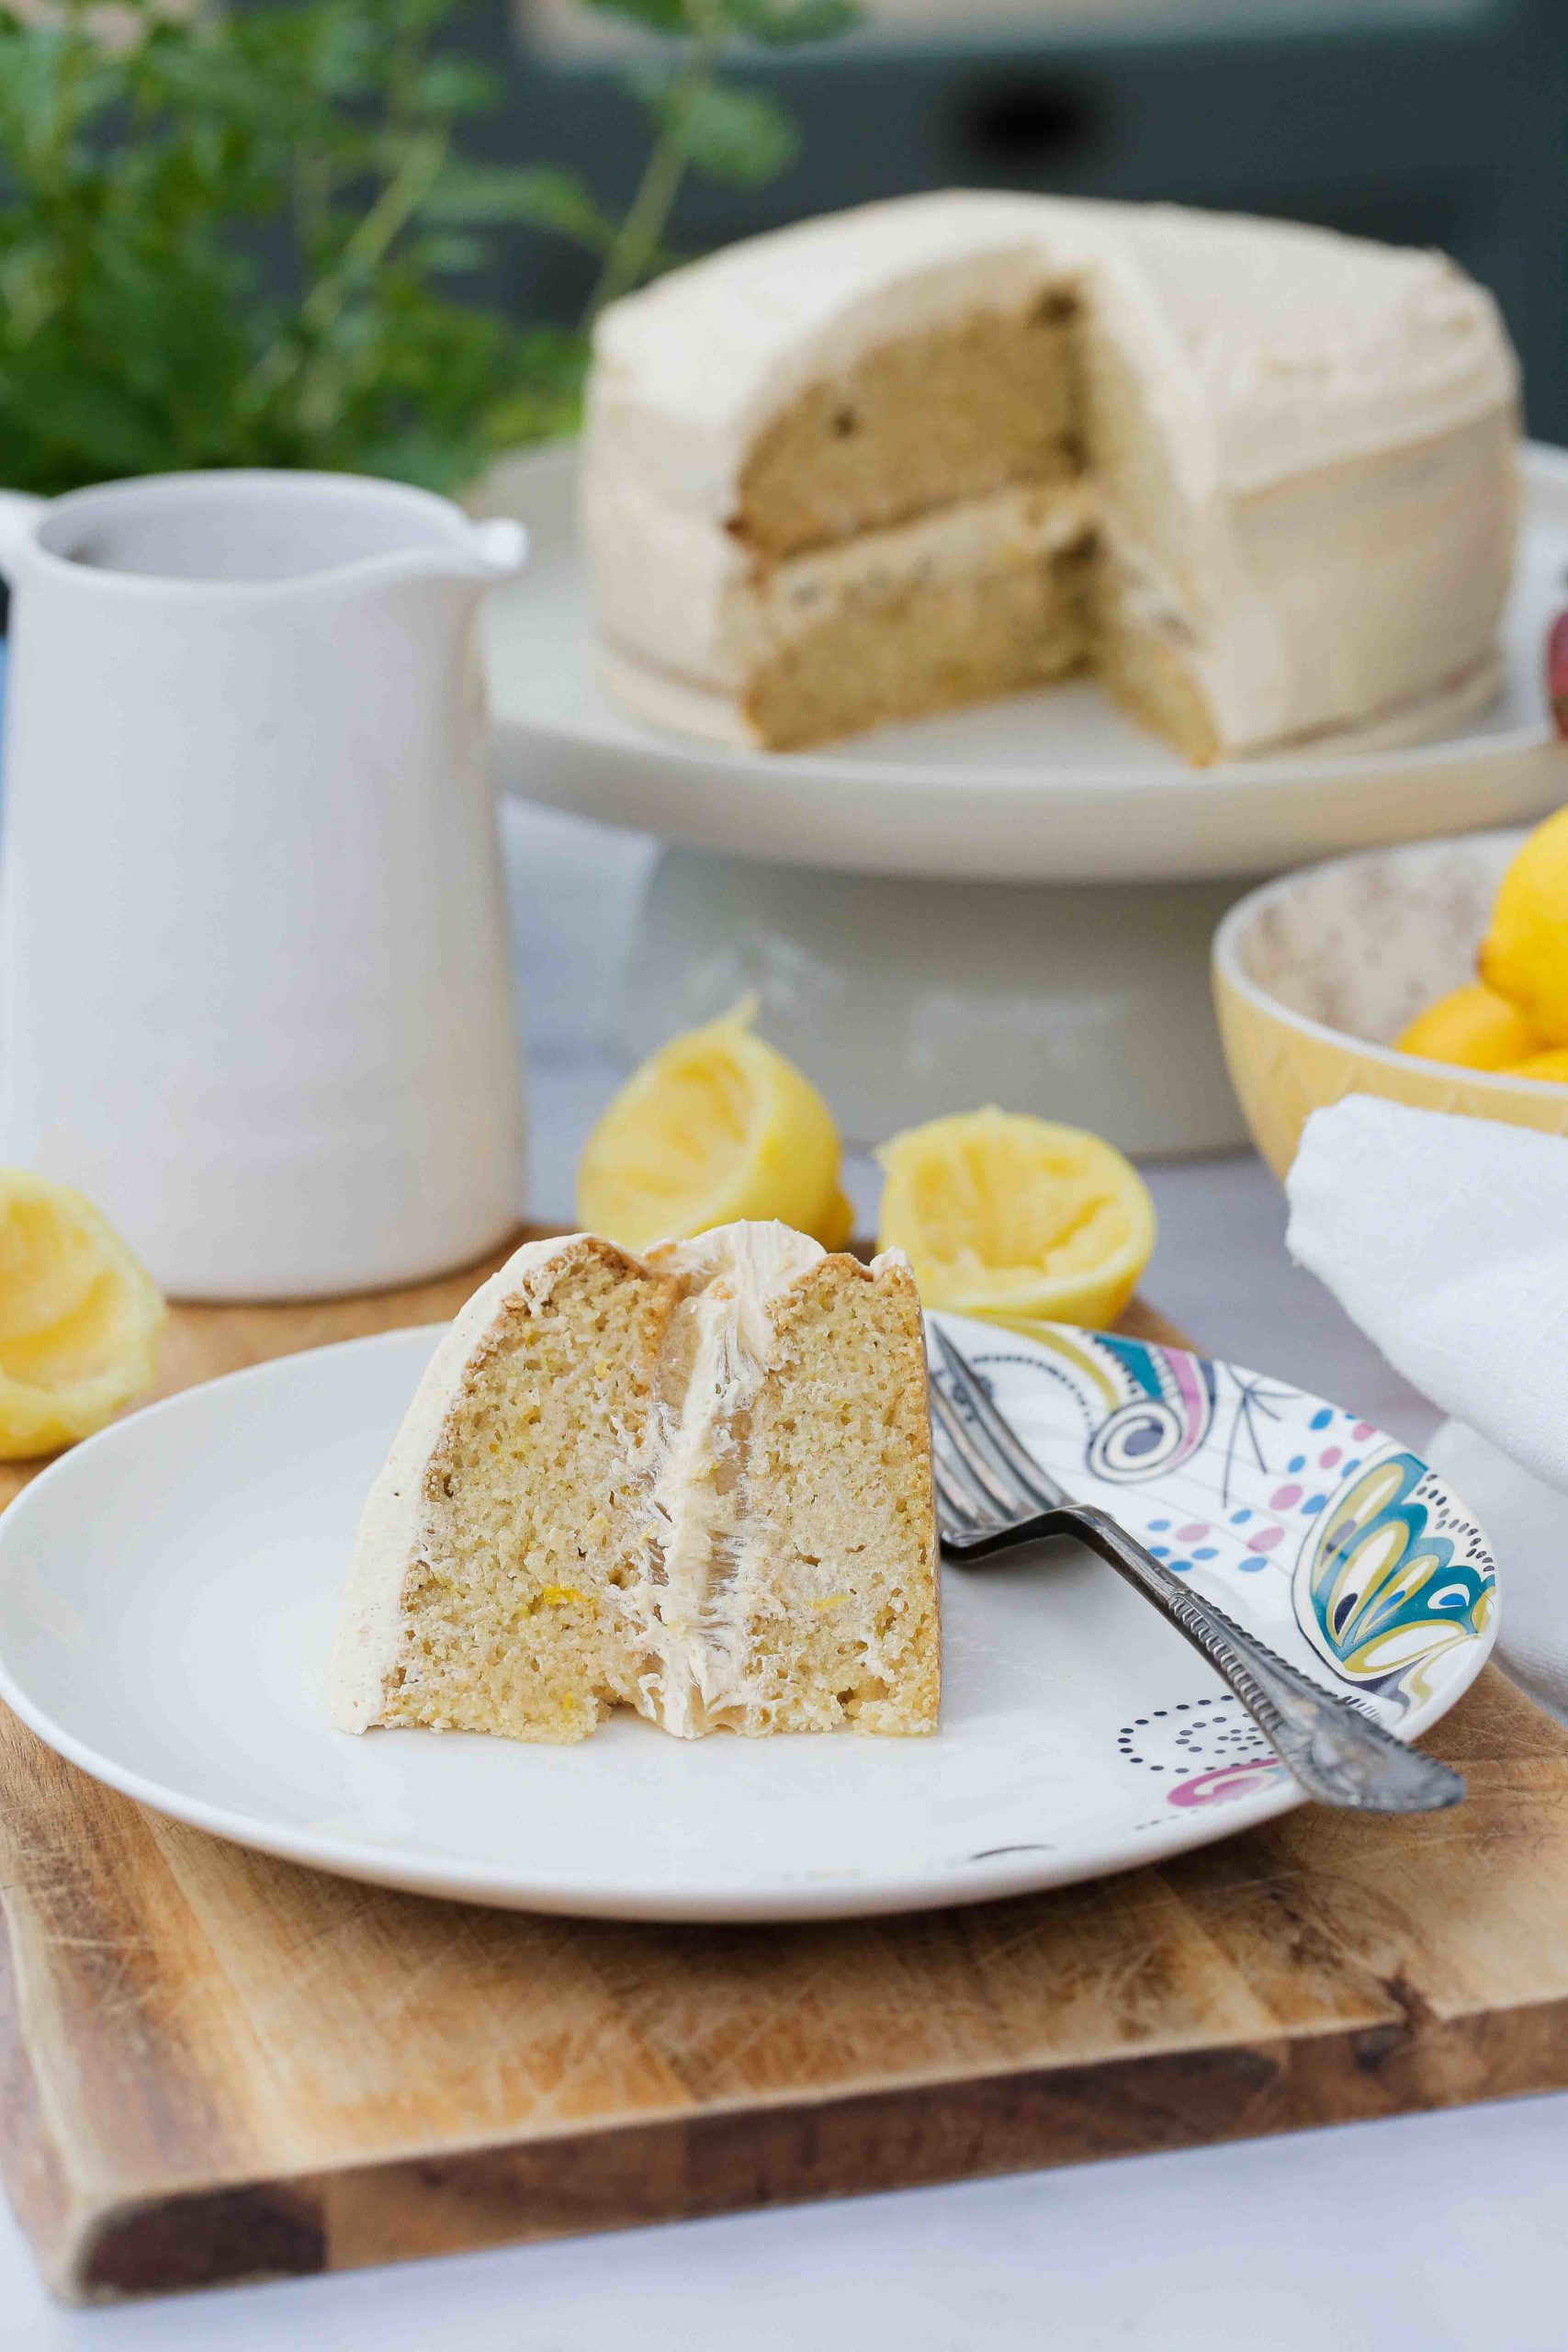 Homemade lemon curd sandwiched between lemon and vanilla sponge cakes with a lemon frosting makes this Lemon Curd Cake the perfect afternoon treat! Recipe on thecookandhim.com | #lemoncurd #lemoncurdcake #veganbaking #vegancake #dairyfree #eggfree